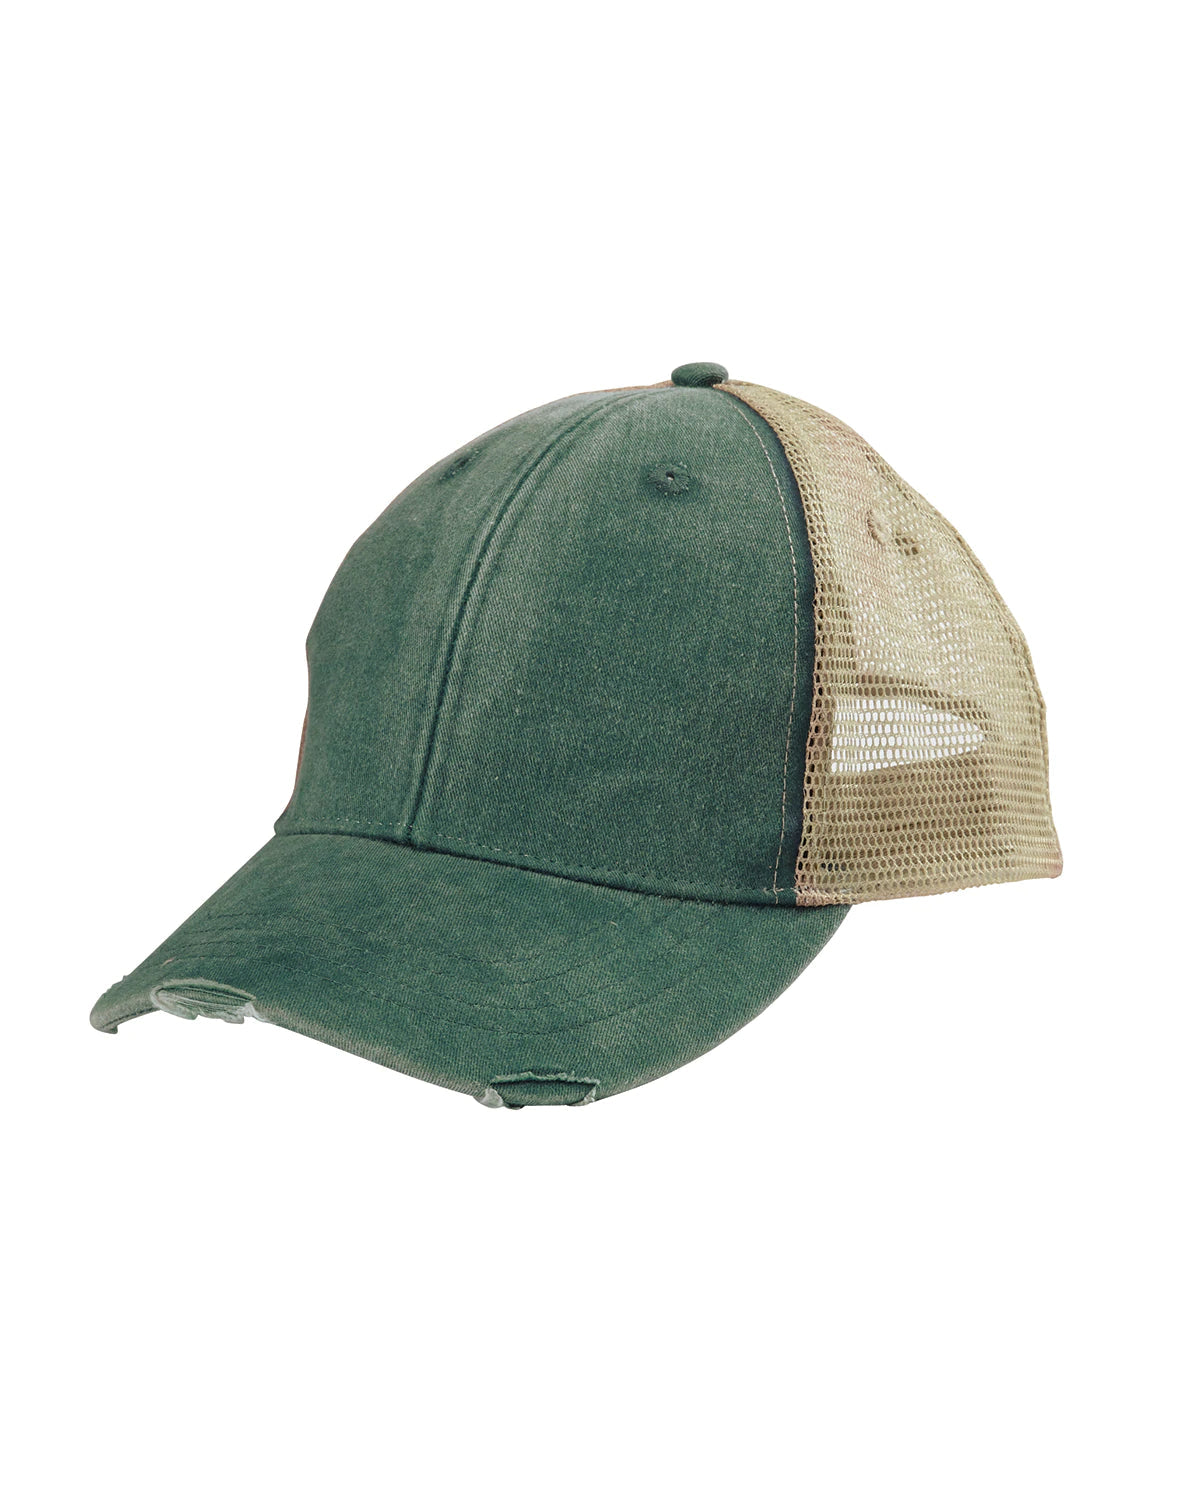 AFJROTC SC-871 Custom Leather Patch Hat